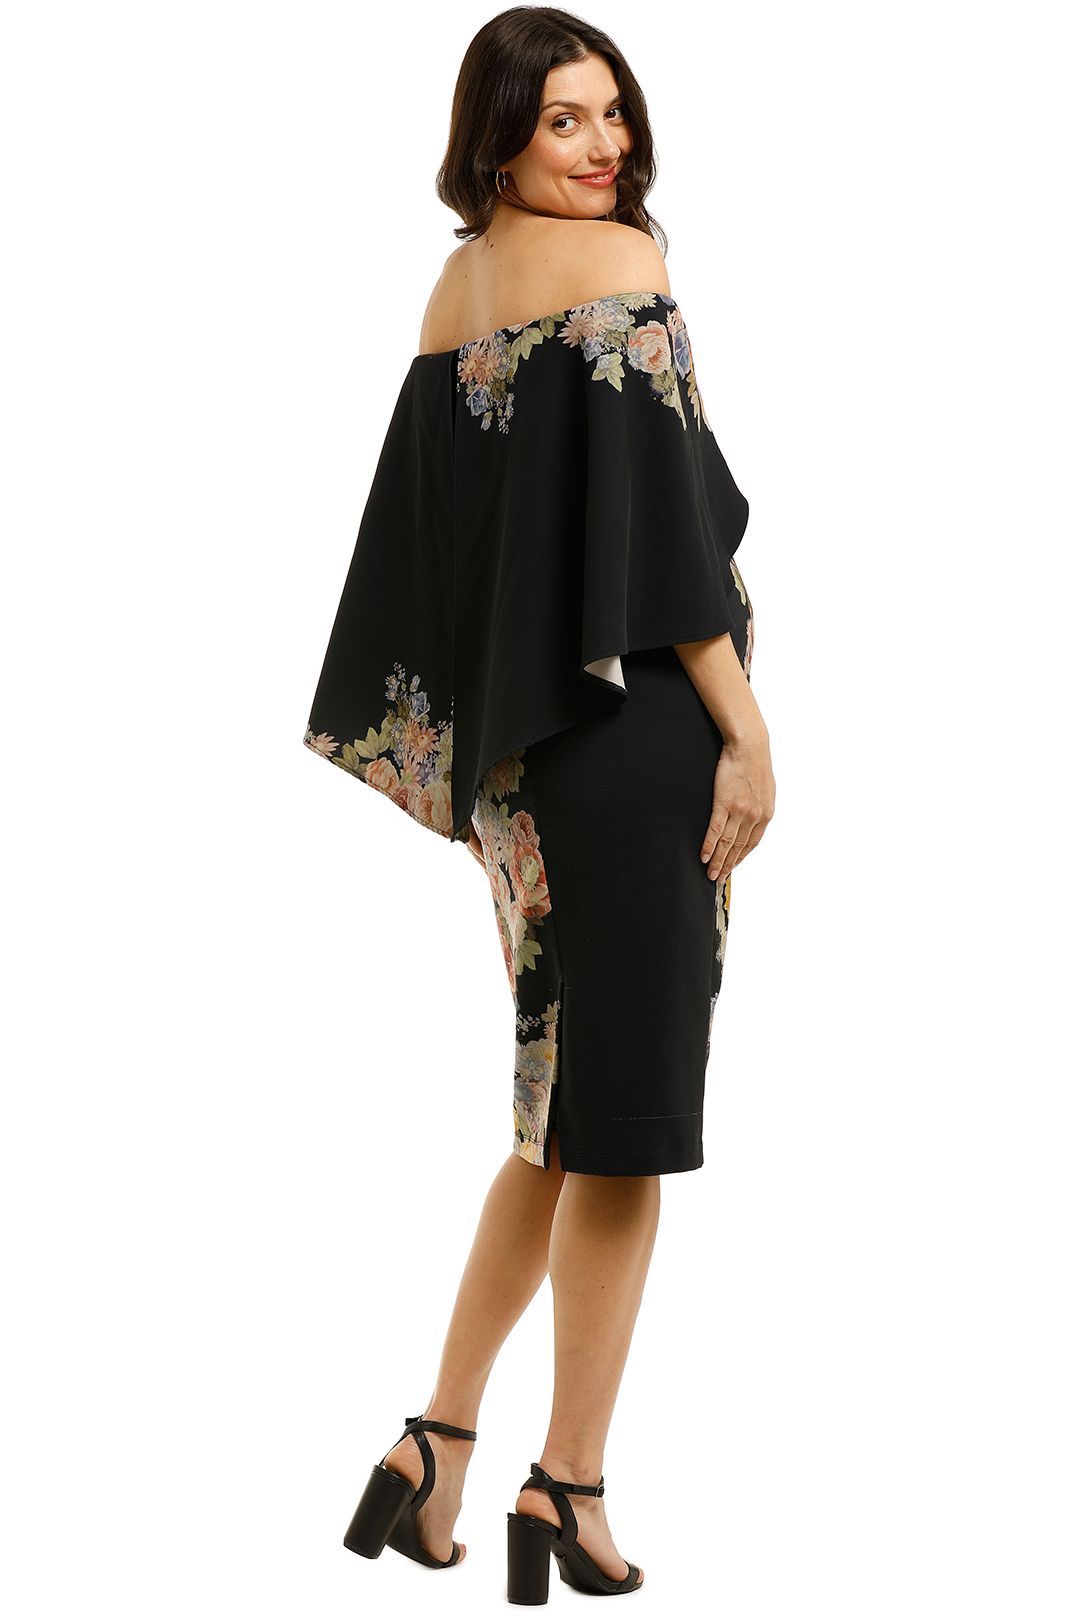 Pasduchas - Flower Garden Shoulder Midi Dress - Black - Side